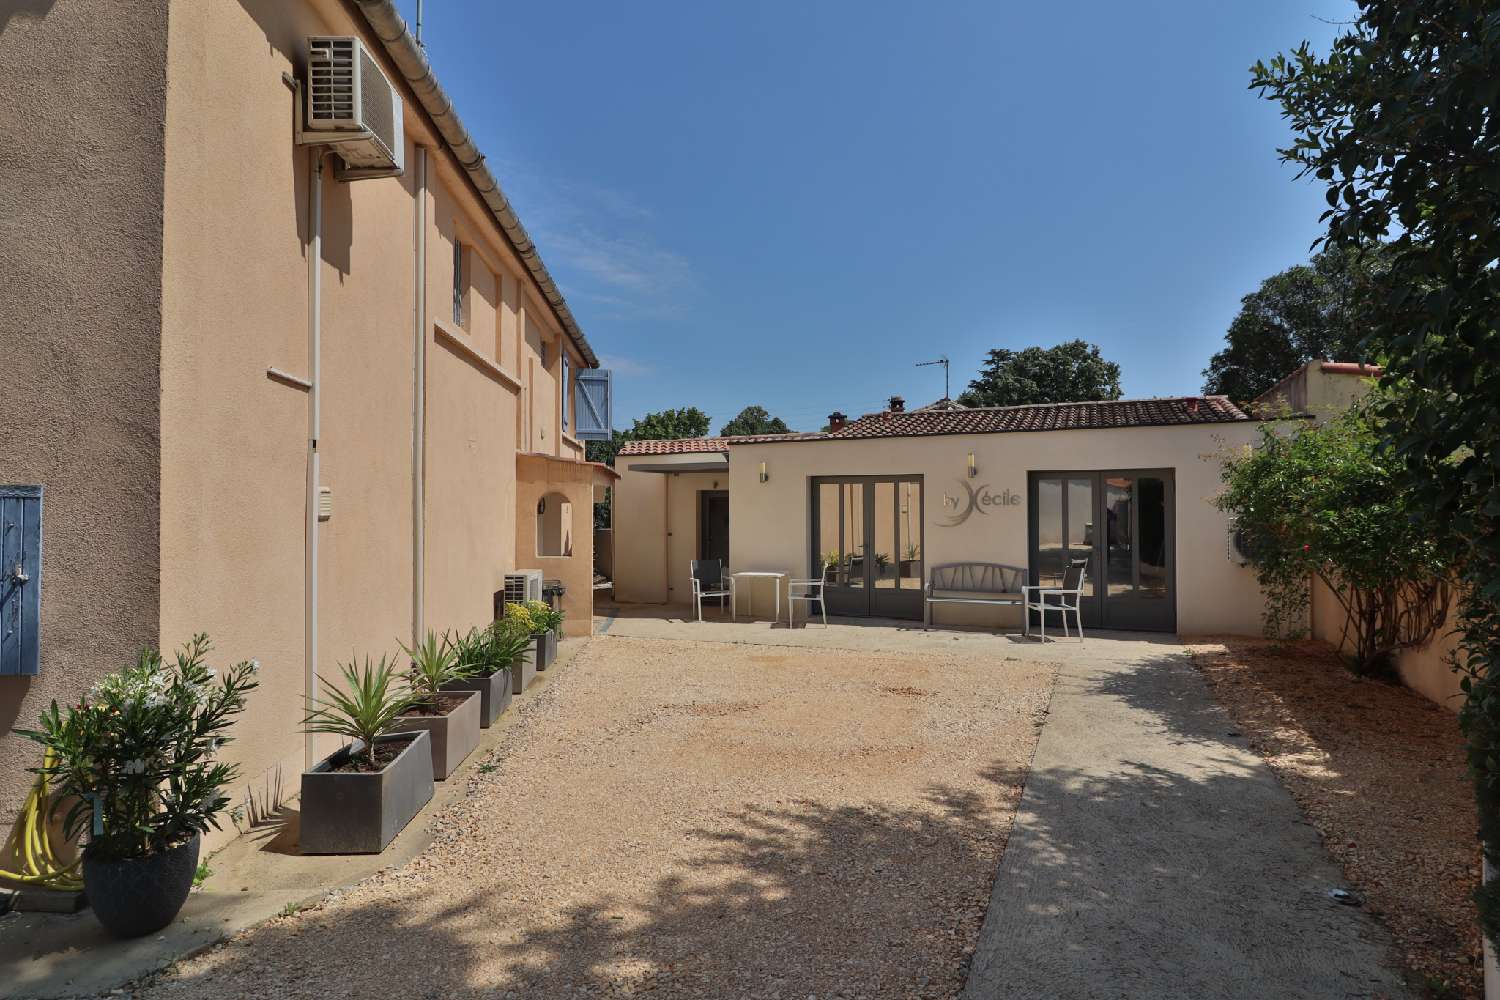  à vendre villa Bouillargues Gard 4